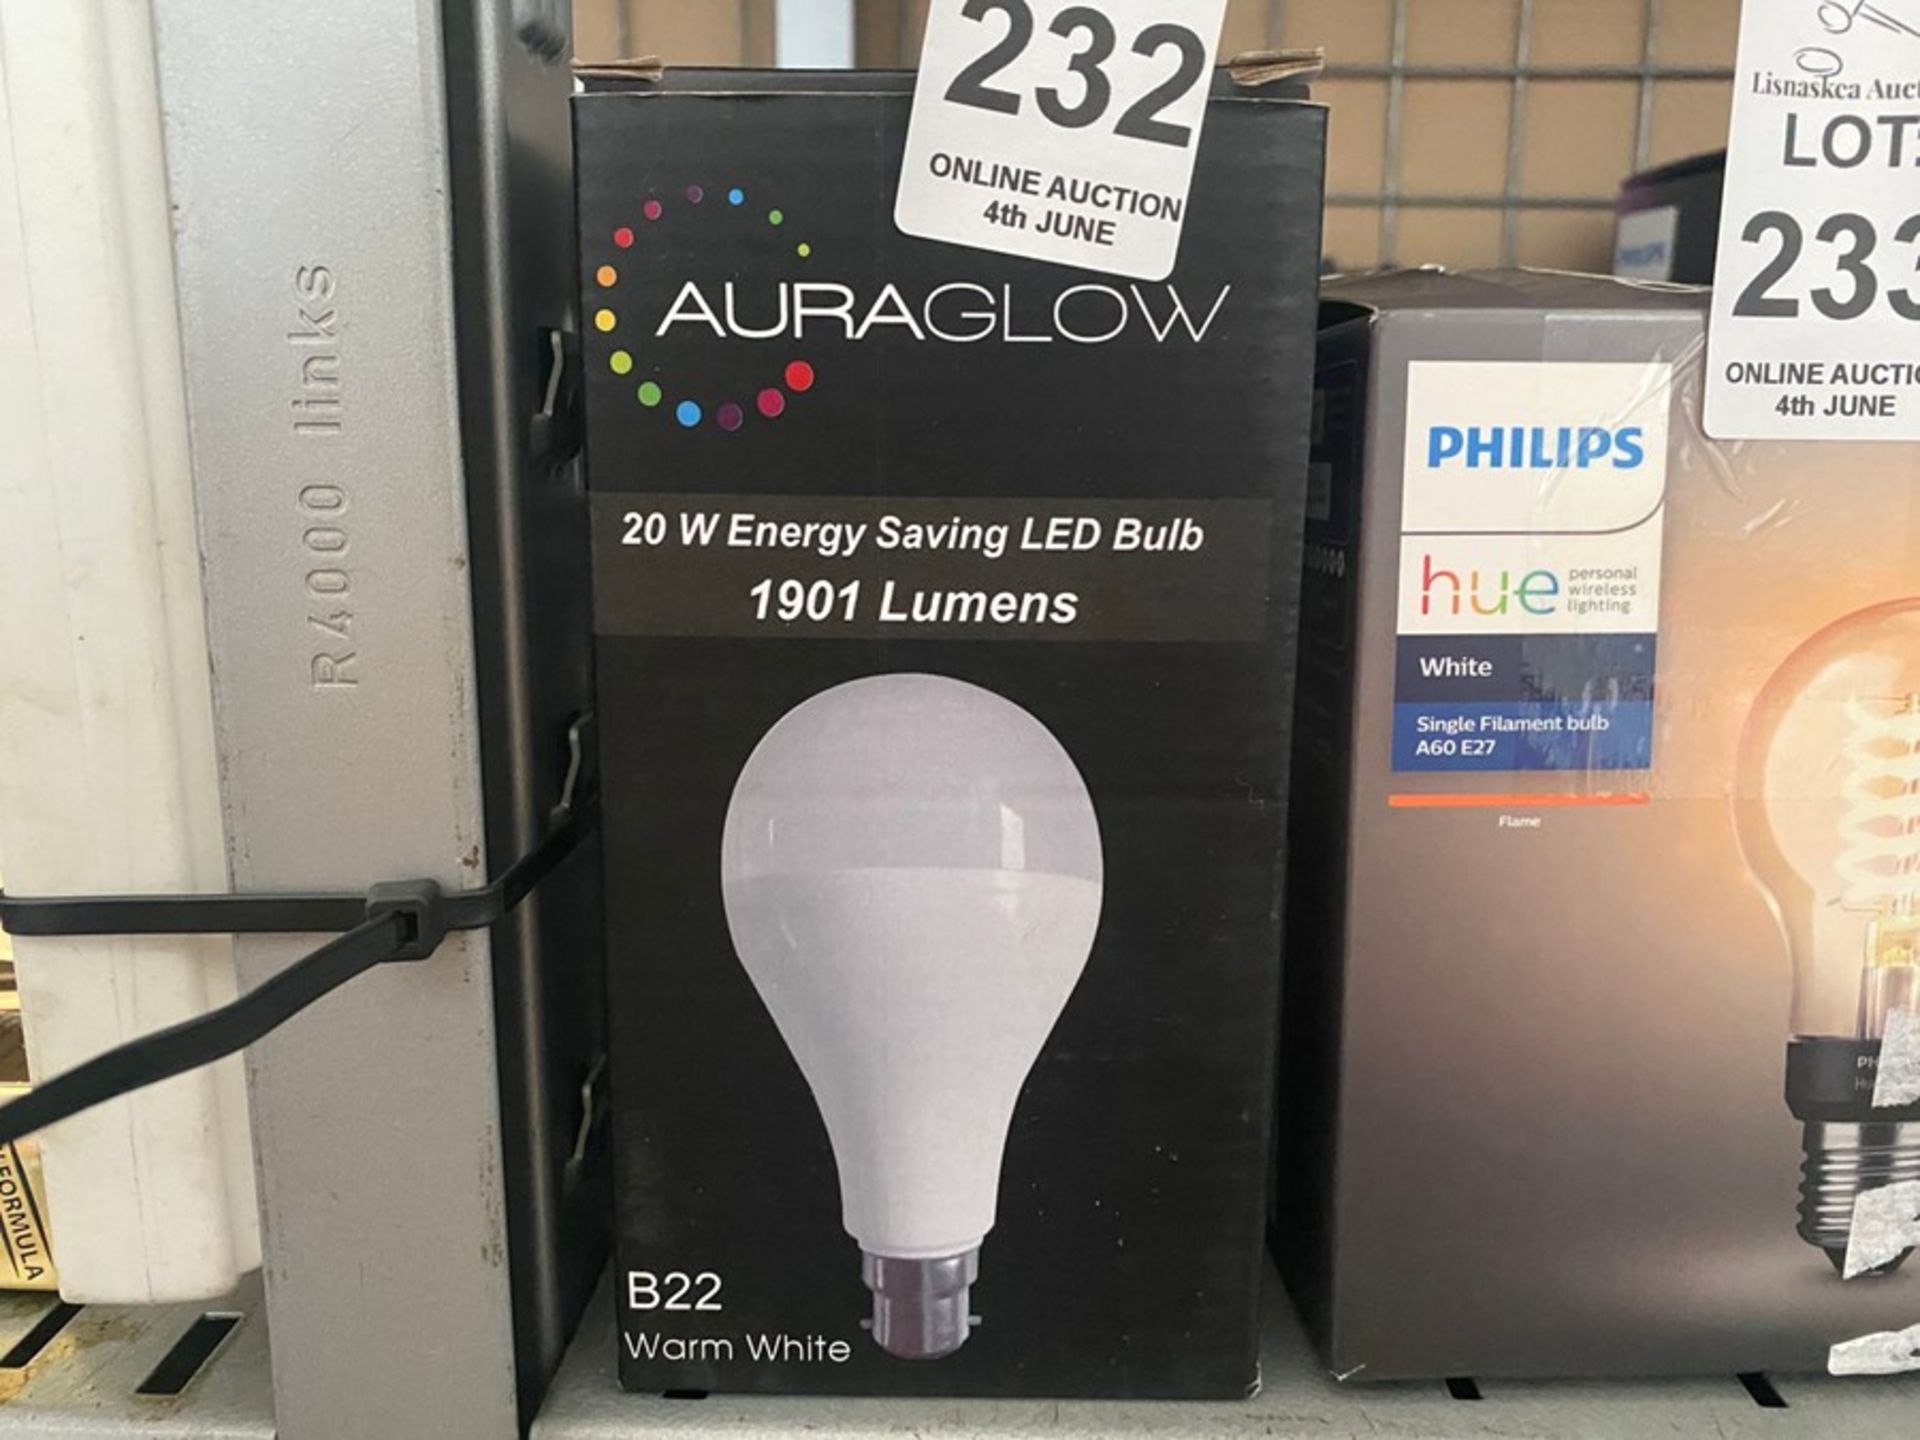 AURAGLOW 20W ENERGY SAVING LED BULB